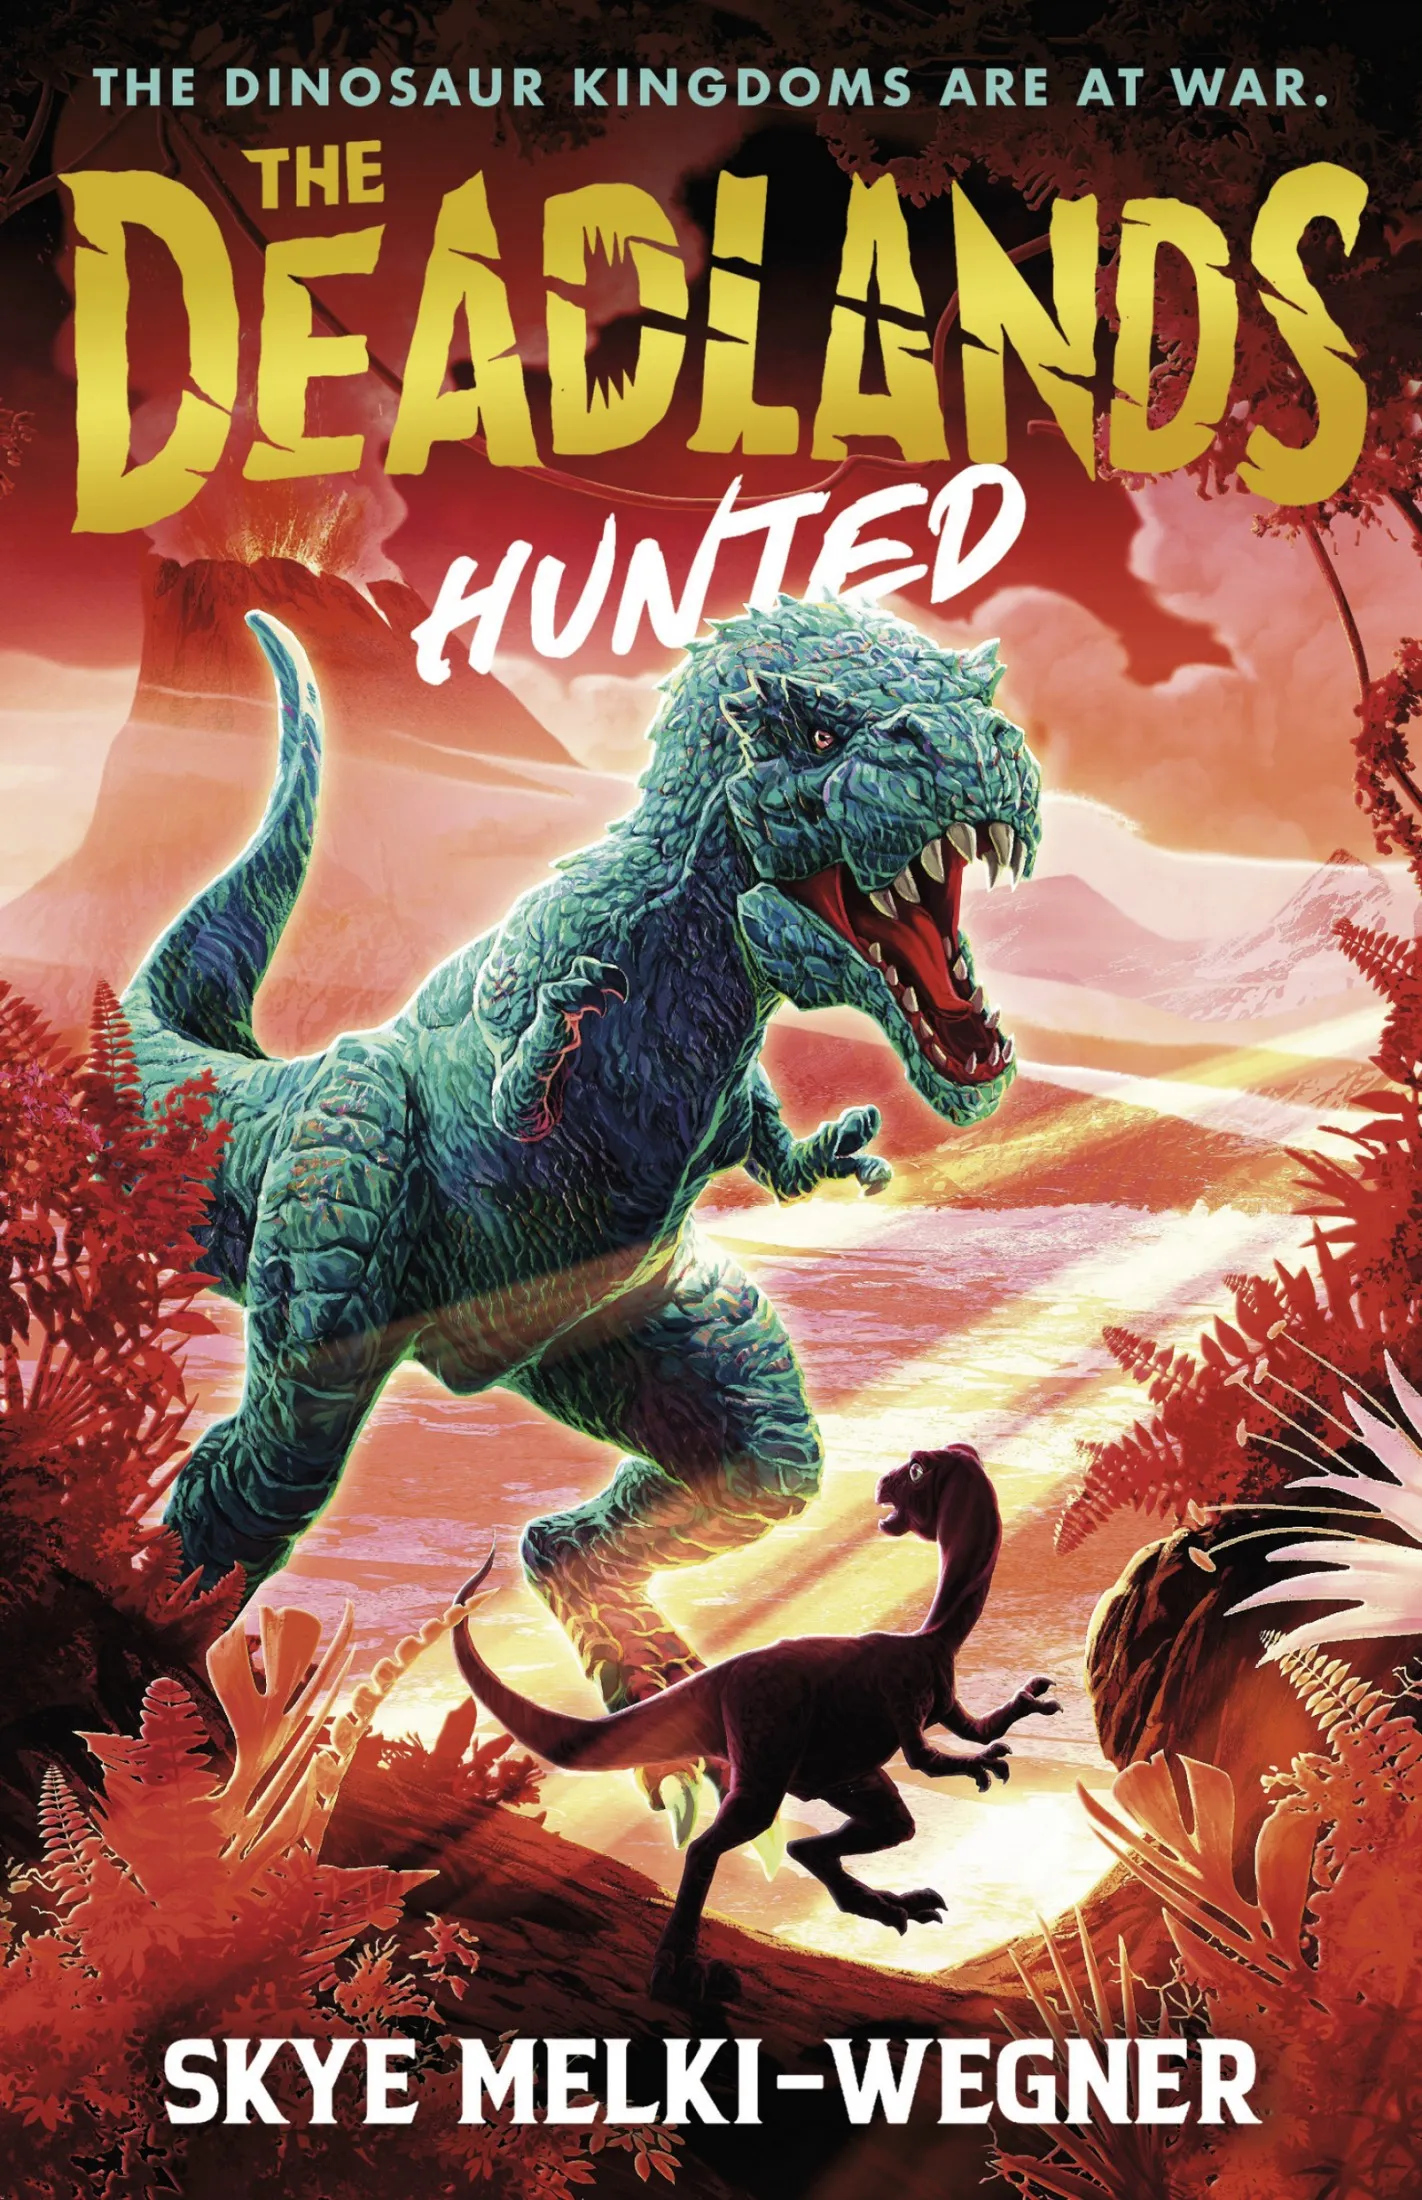 Hunted (The Deadlands #1)